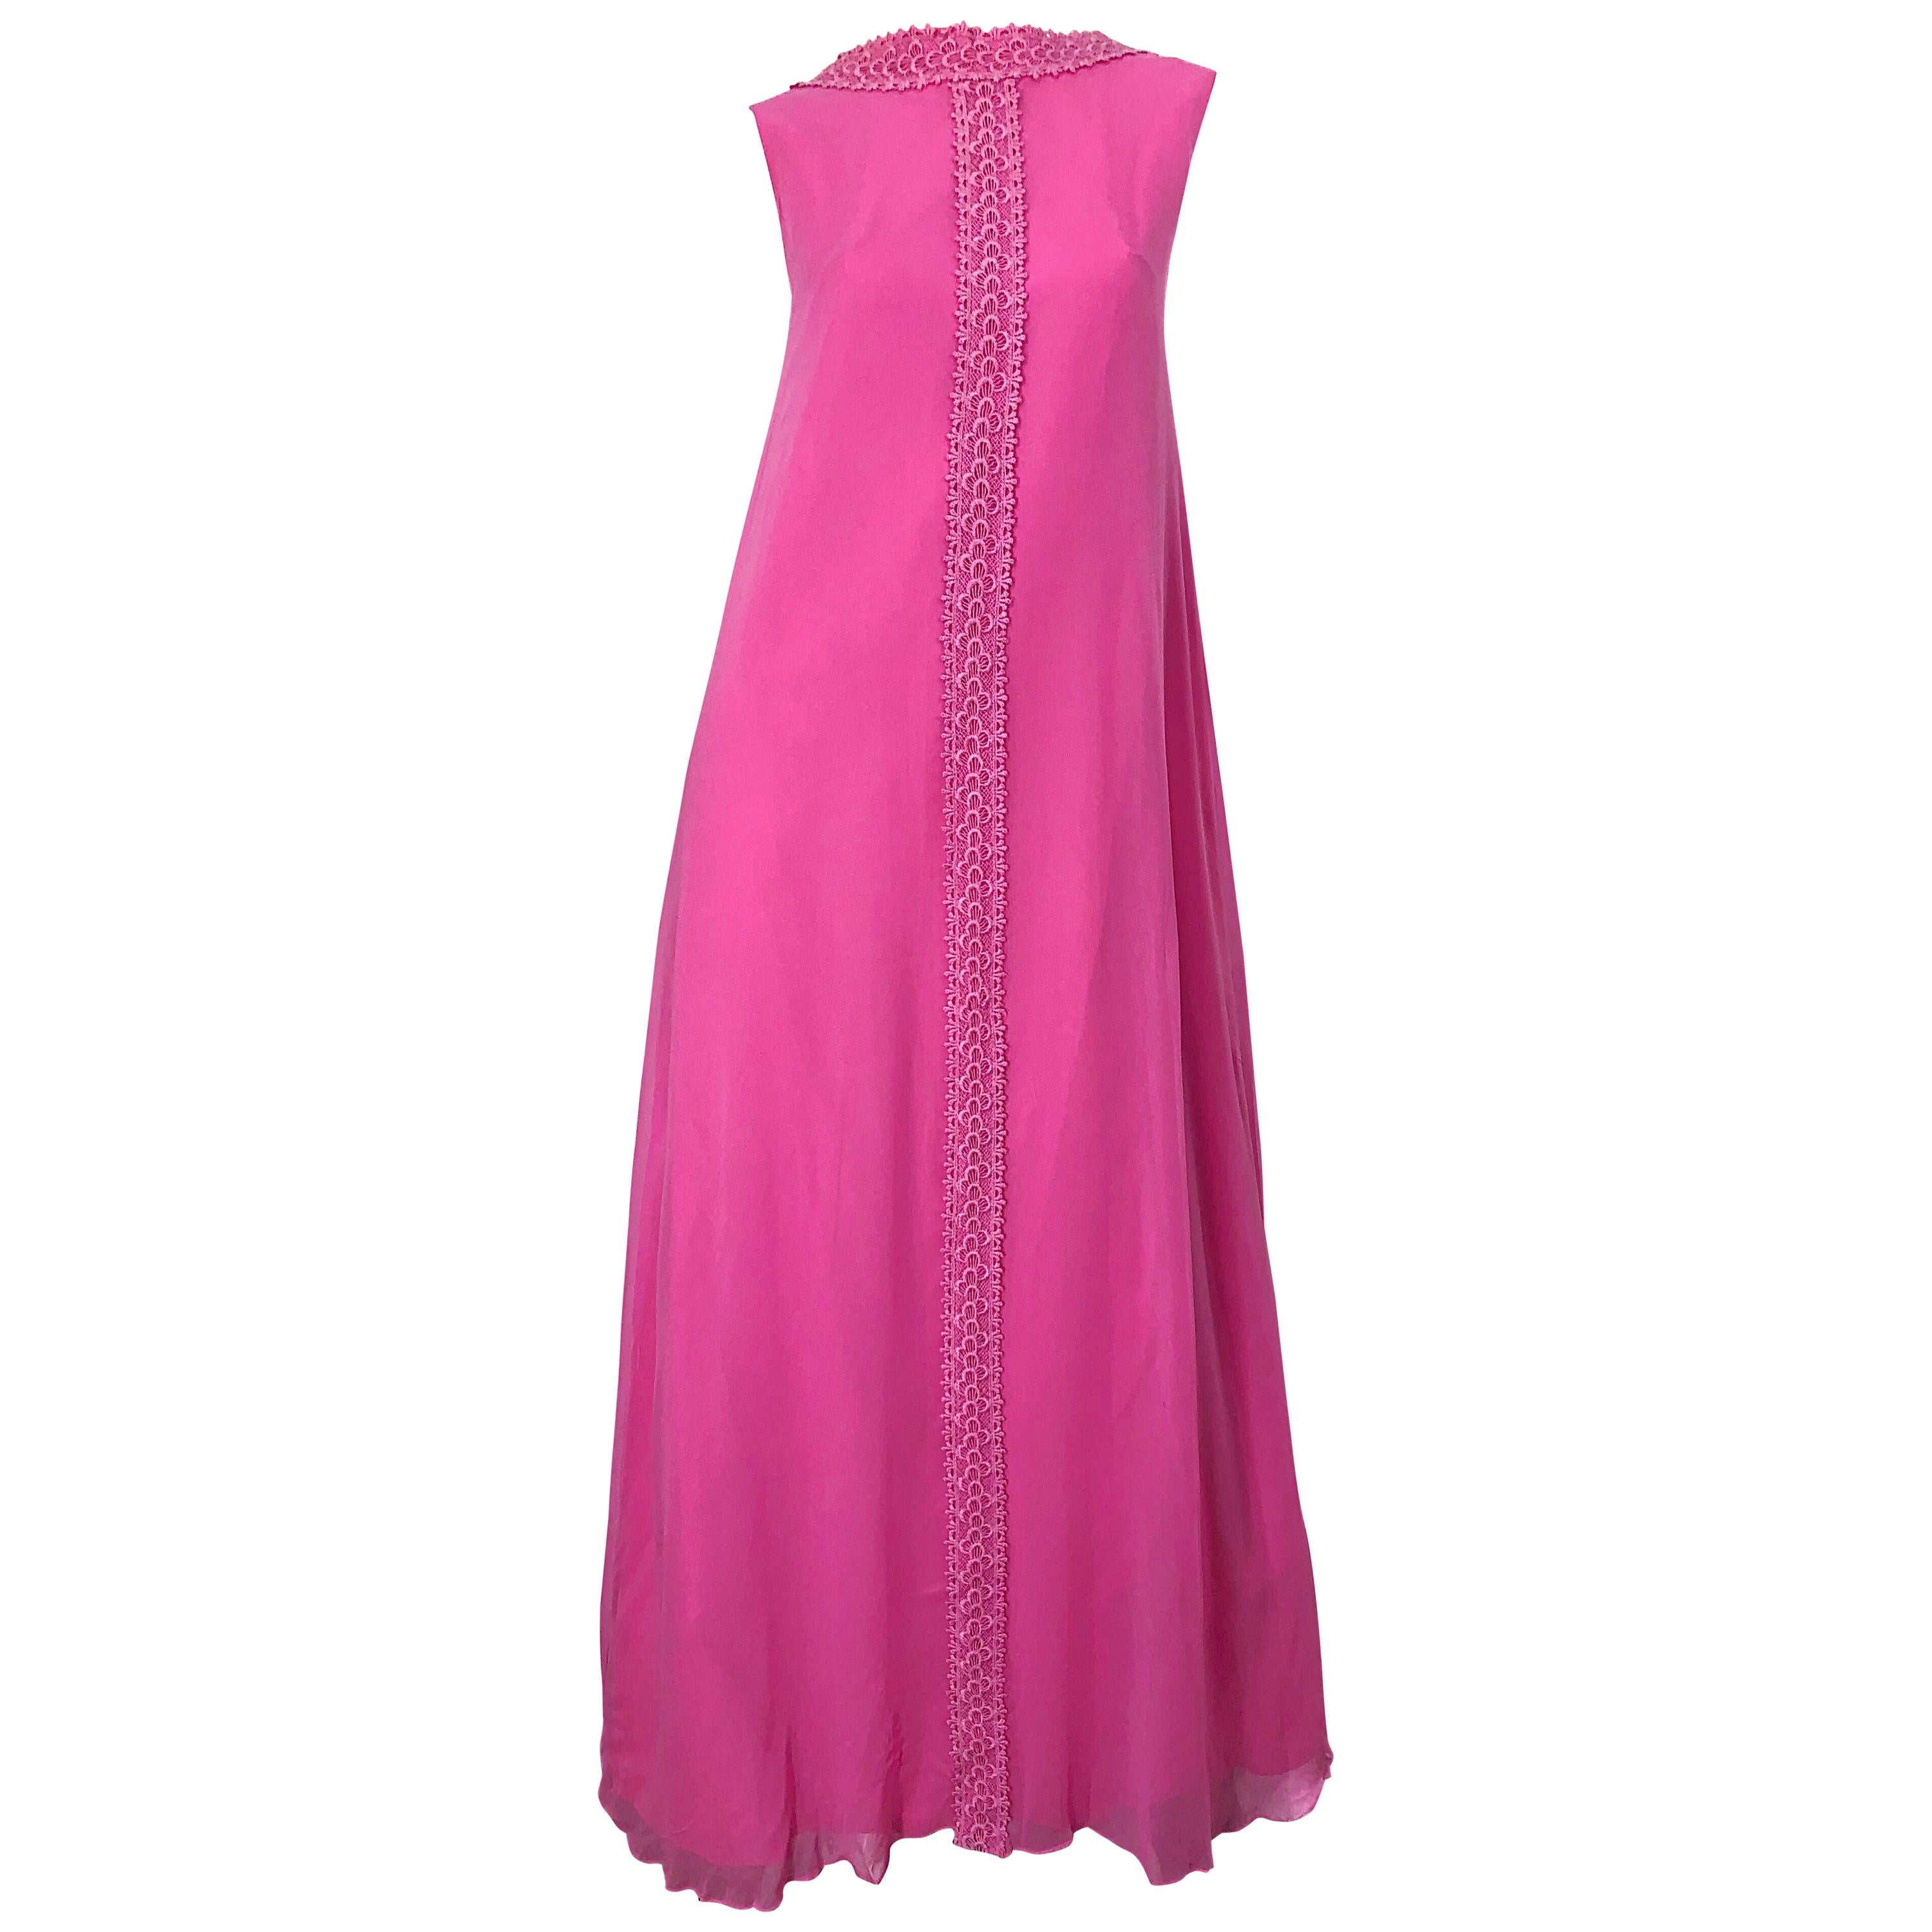 1960s Bubblegum Pink Silk Chiffon High Neck Demi Couture Vintage 60s Gown Dress For Sale